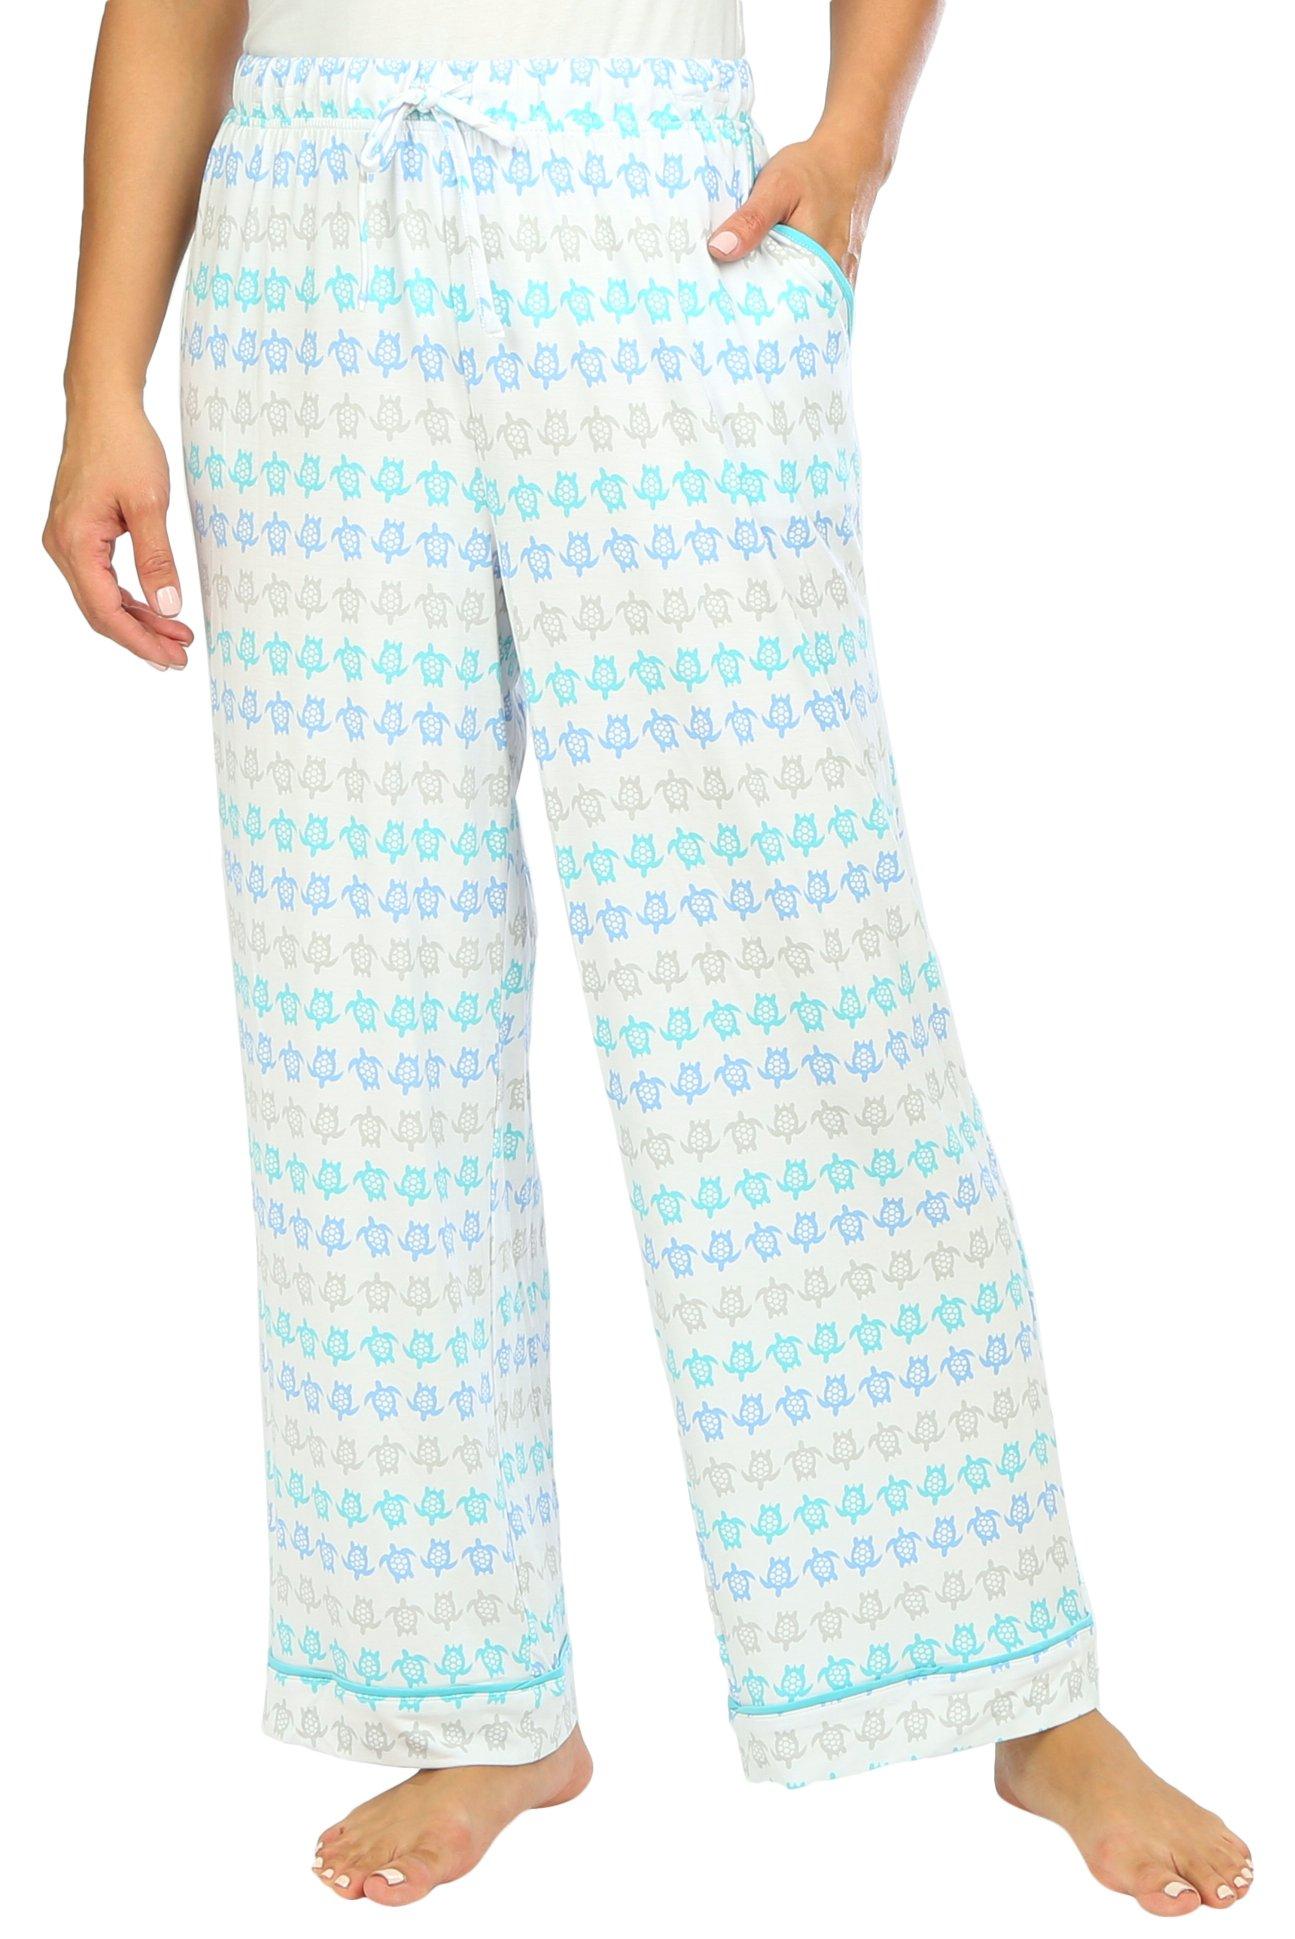 Women's Pajama Pants, Pajama Pants for Women